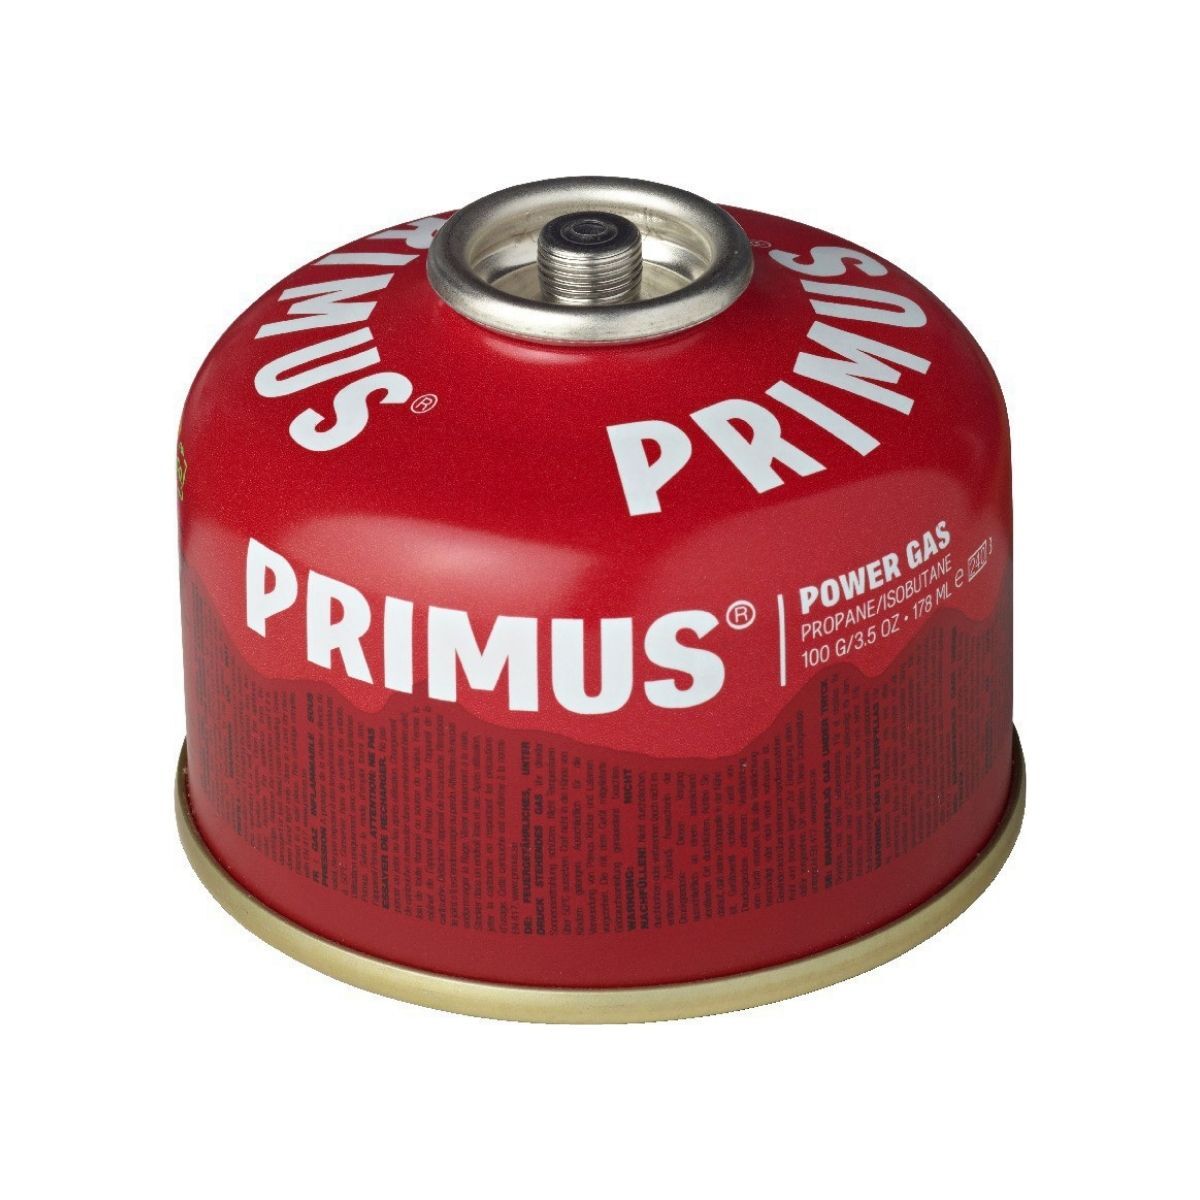 Primus Power Gas 100 g L1 - Cartucho de gas